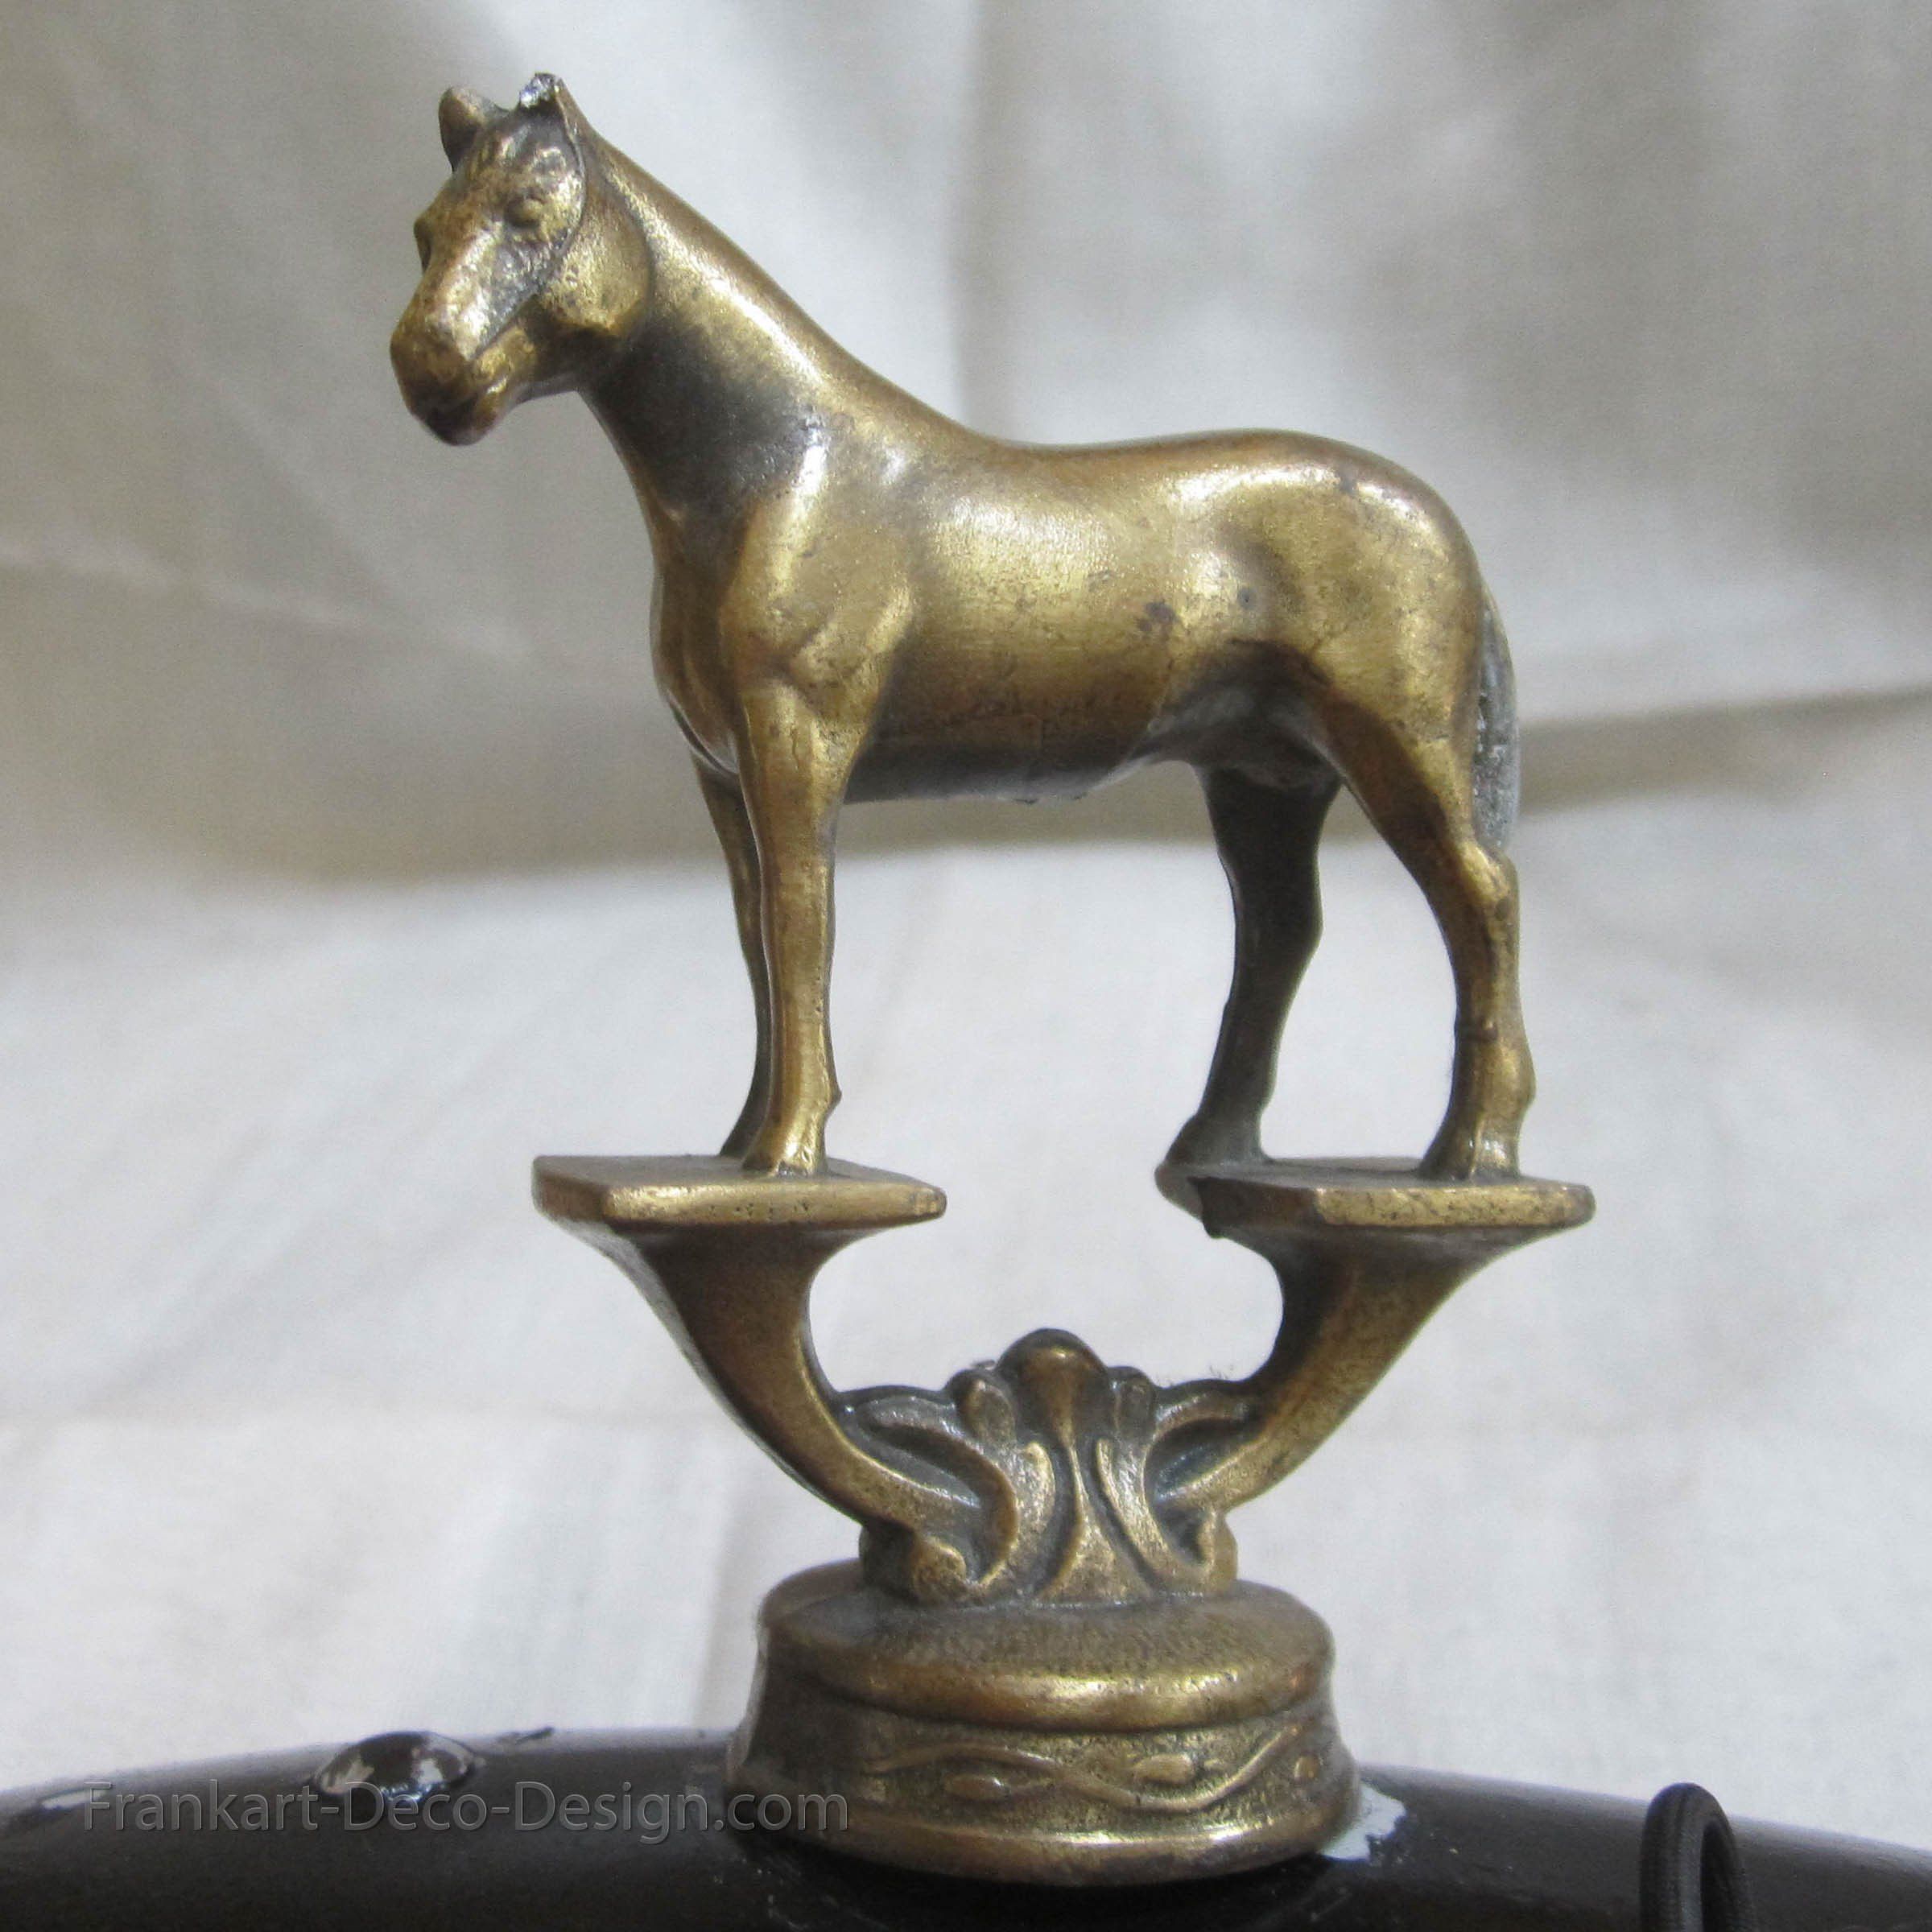 Metall Deko Luxus Bridled Horse Large Brass Hood ornament or Mascot